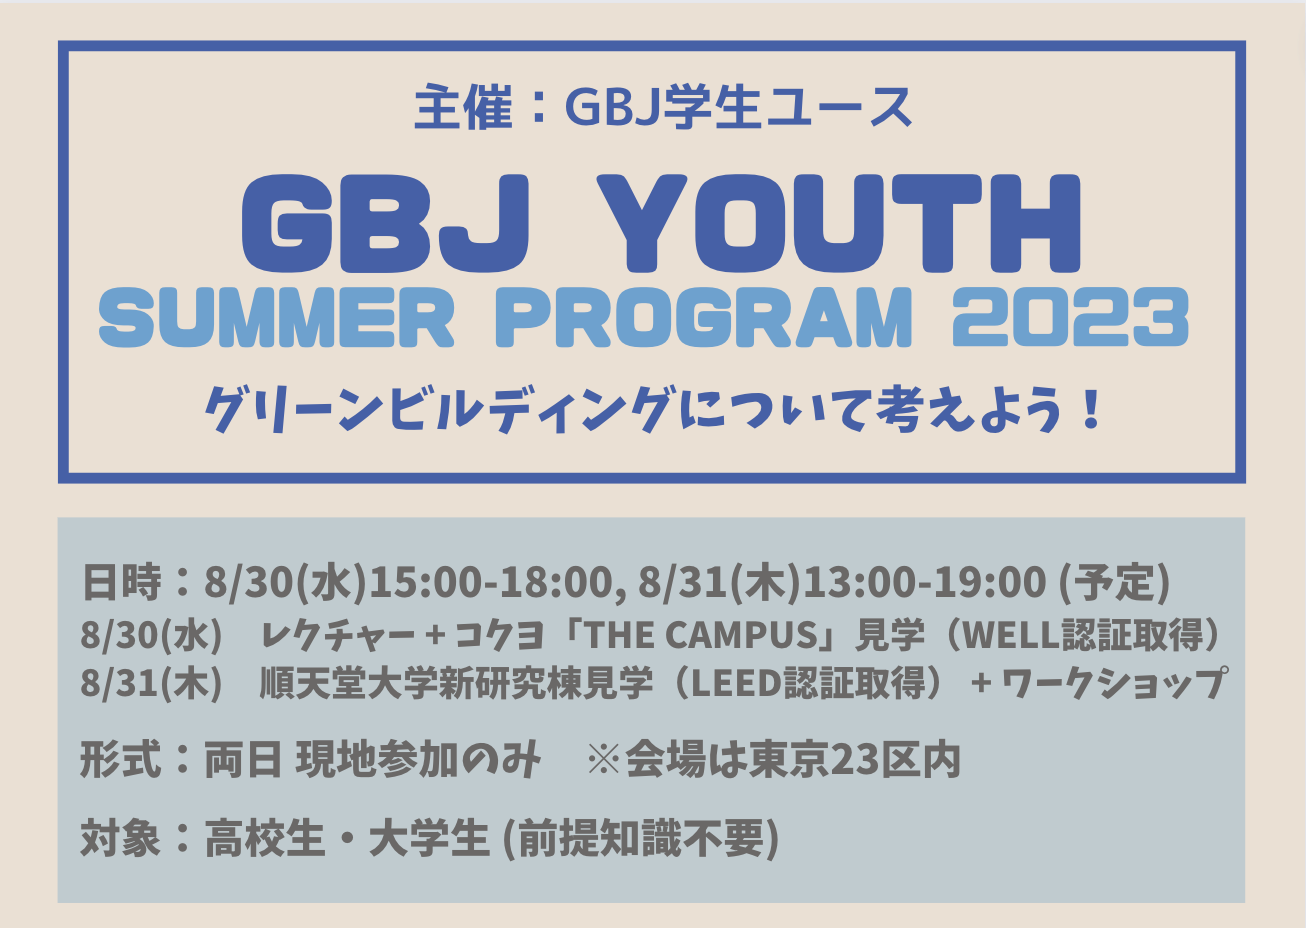 GBJ Youth <span class="highlight">Summer</span> Program 2023「グリーンビルディングを知り、体験しよう」